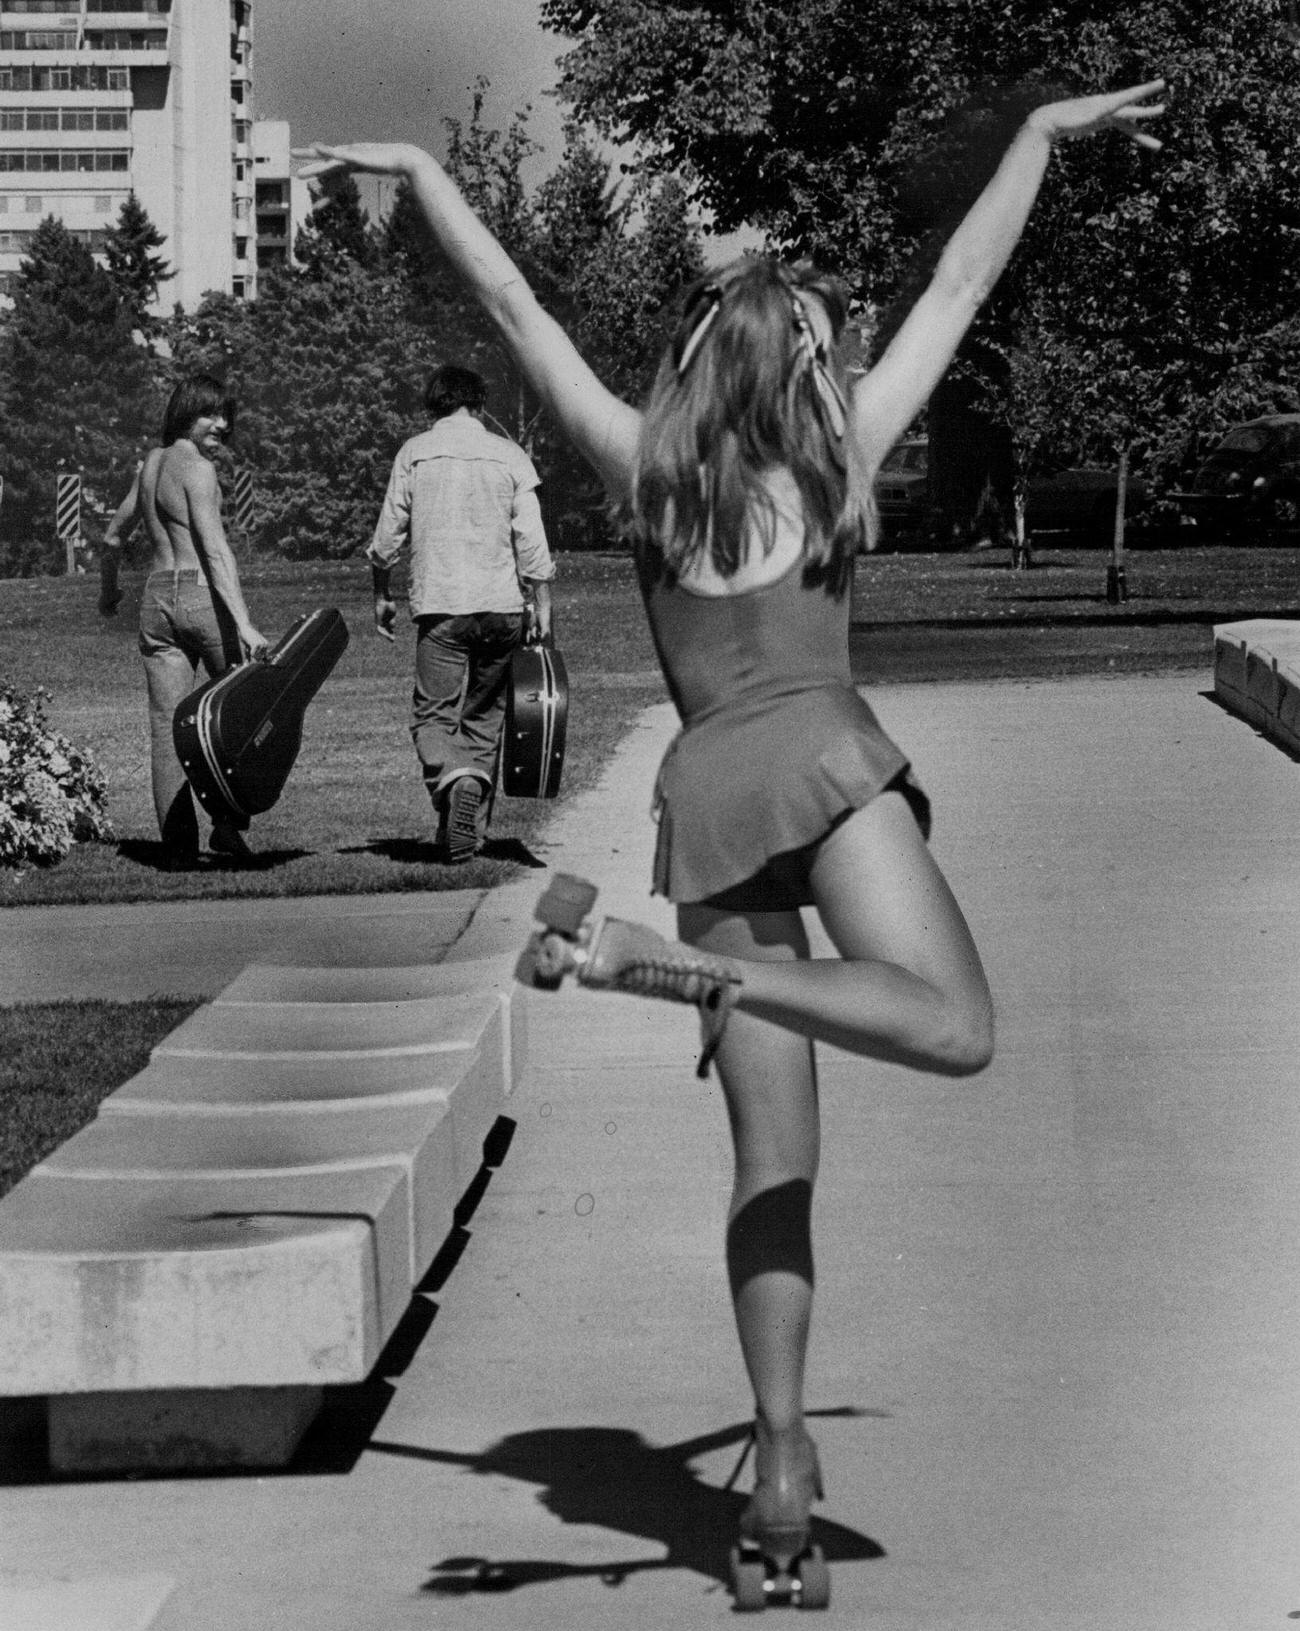 Admiring Glances at Roller Skating, 1979